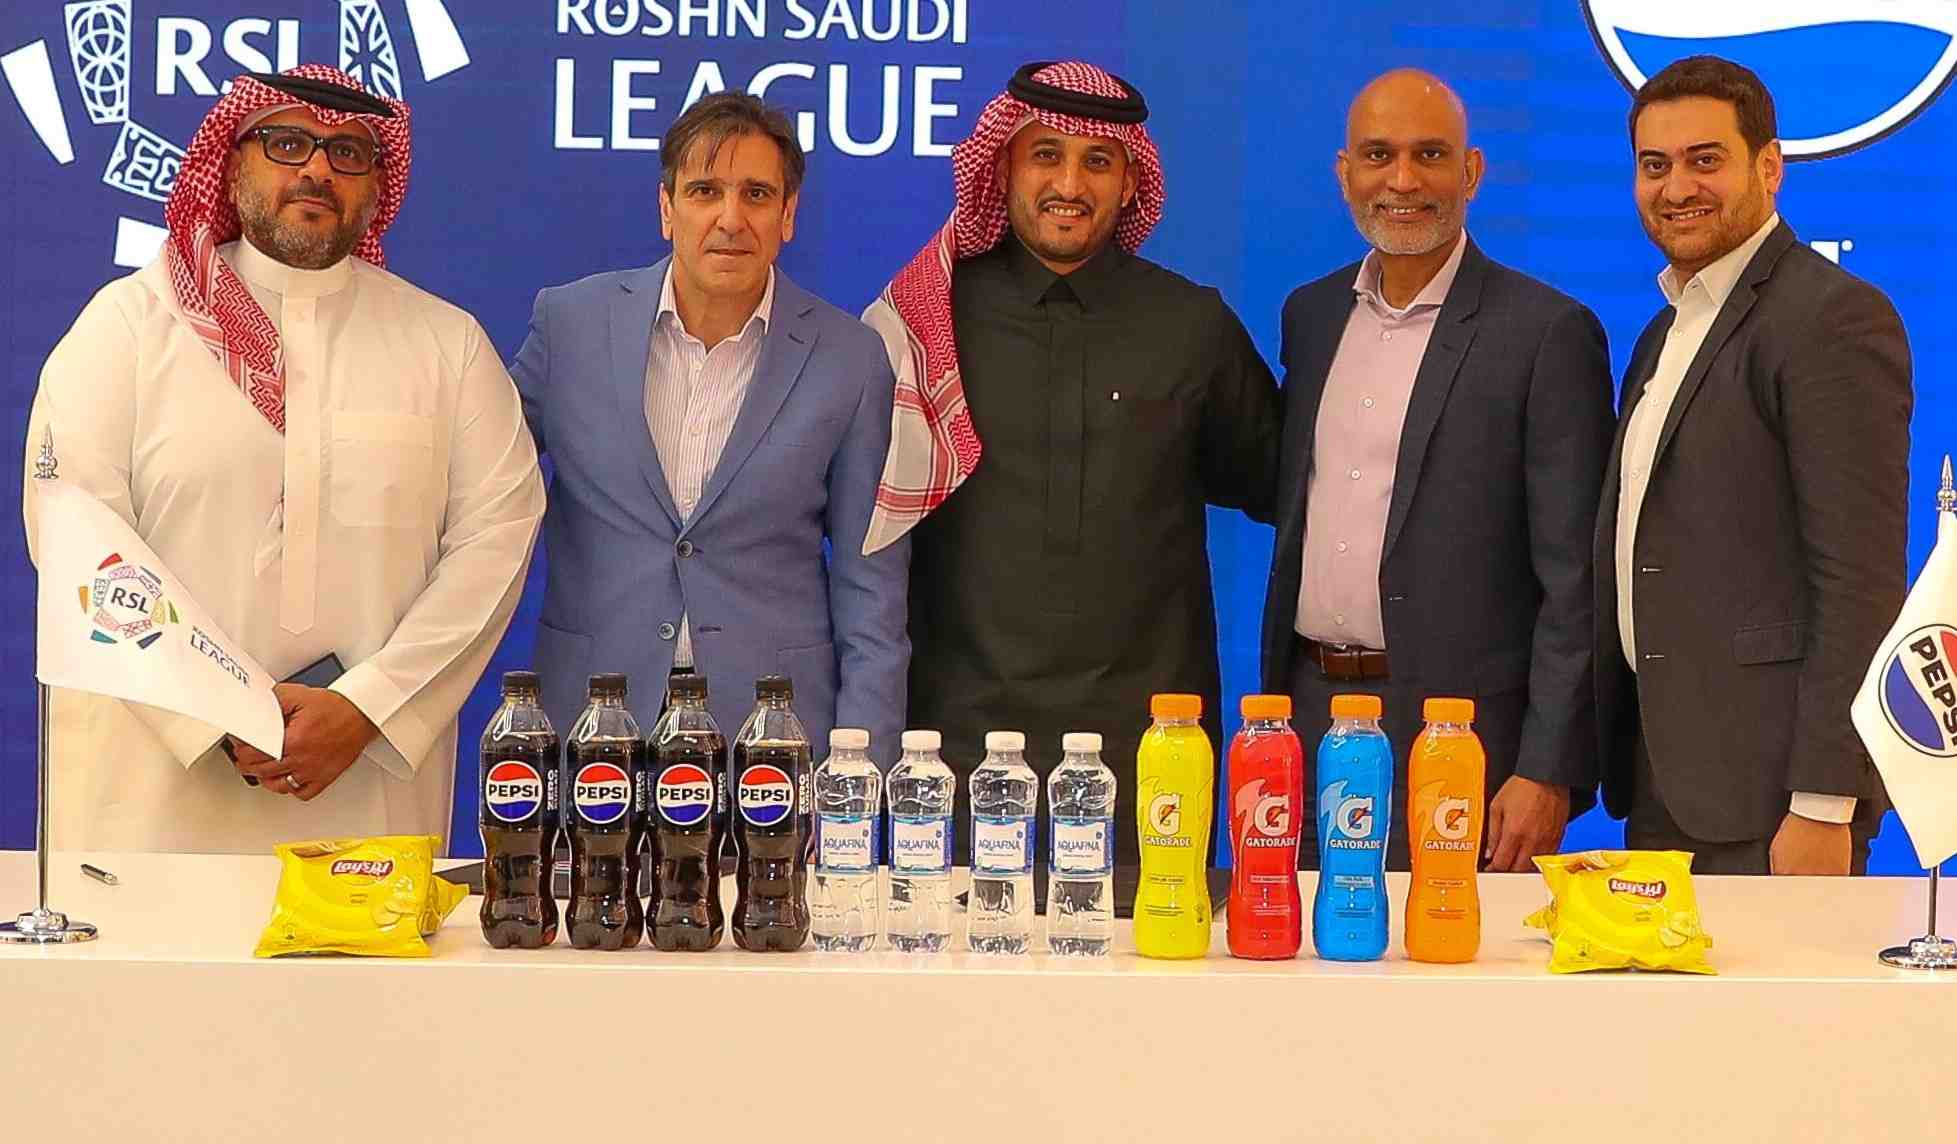 Roshn Saudi League welcomes PepsiCo as Gold Partner